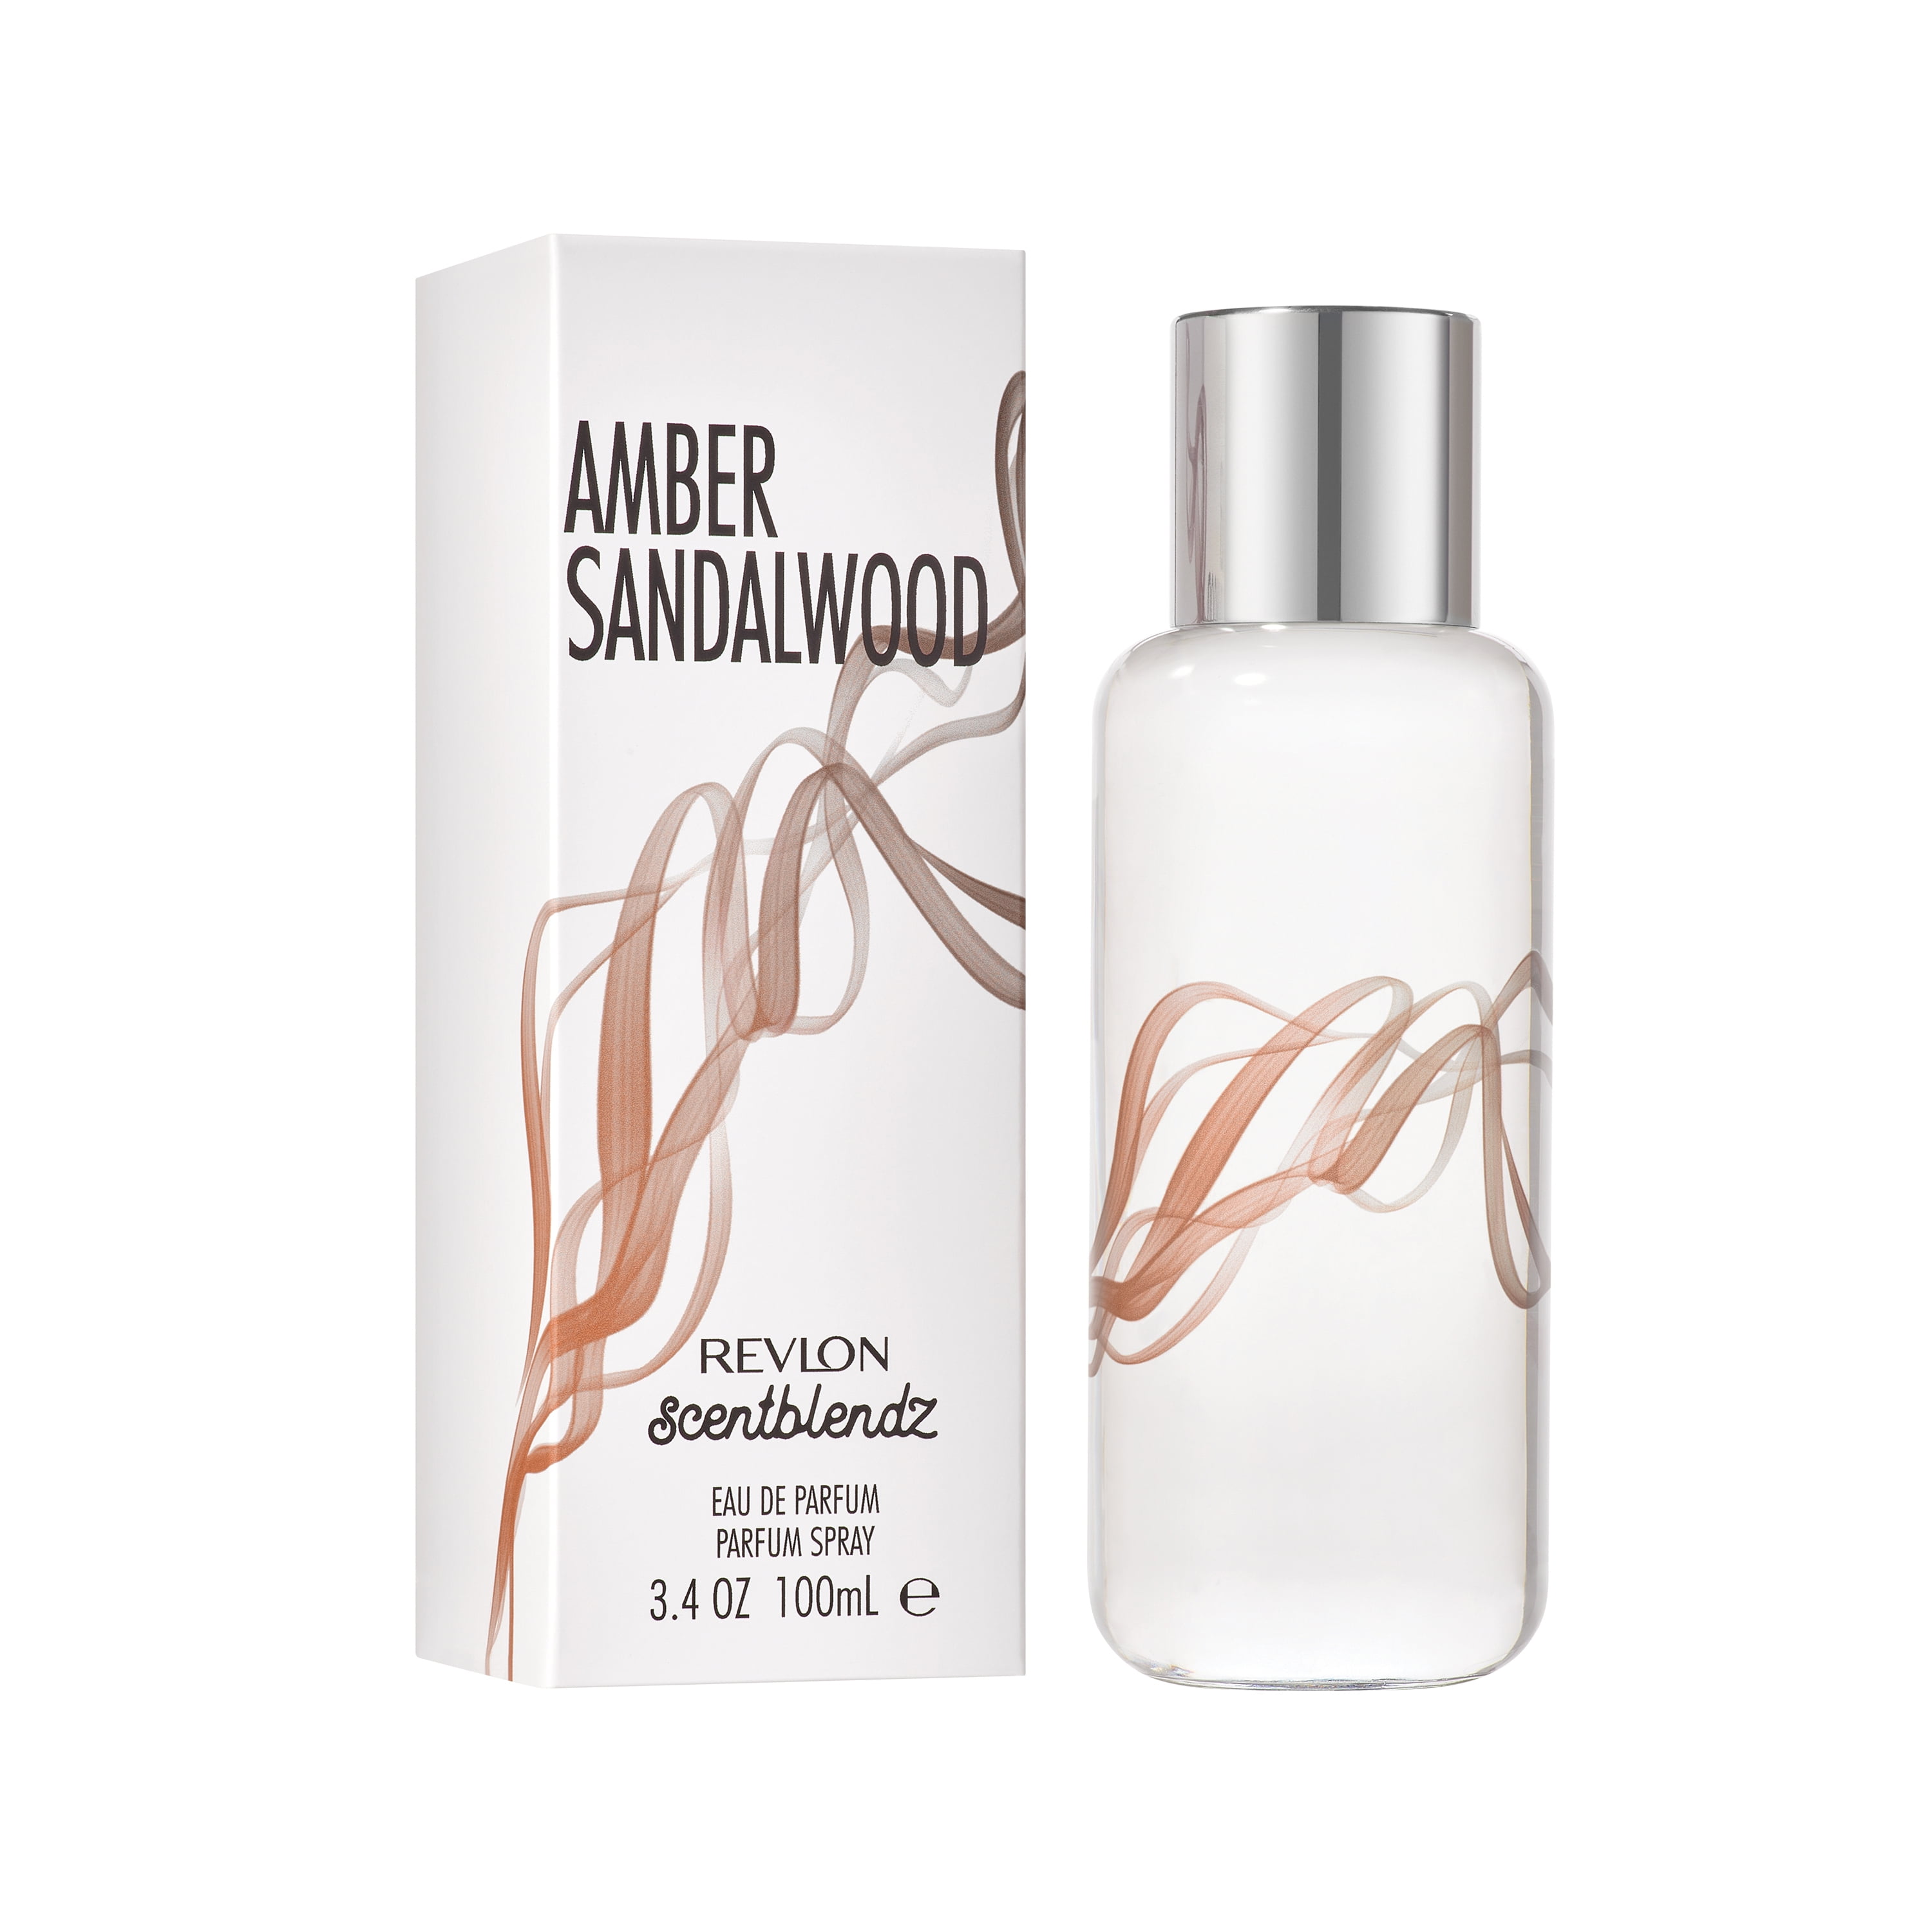 Revlon Scentblendz, Amber Sandalwood Eau de Parfum, Artisanal Fragrance Spray, Perfume for Women, 3.4 fl. Oz